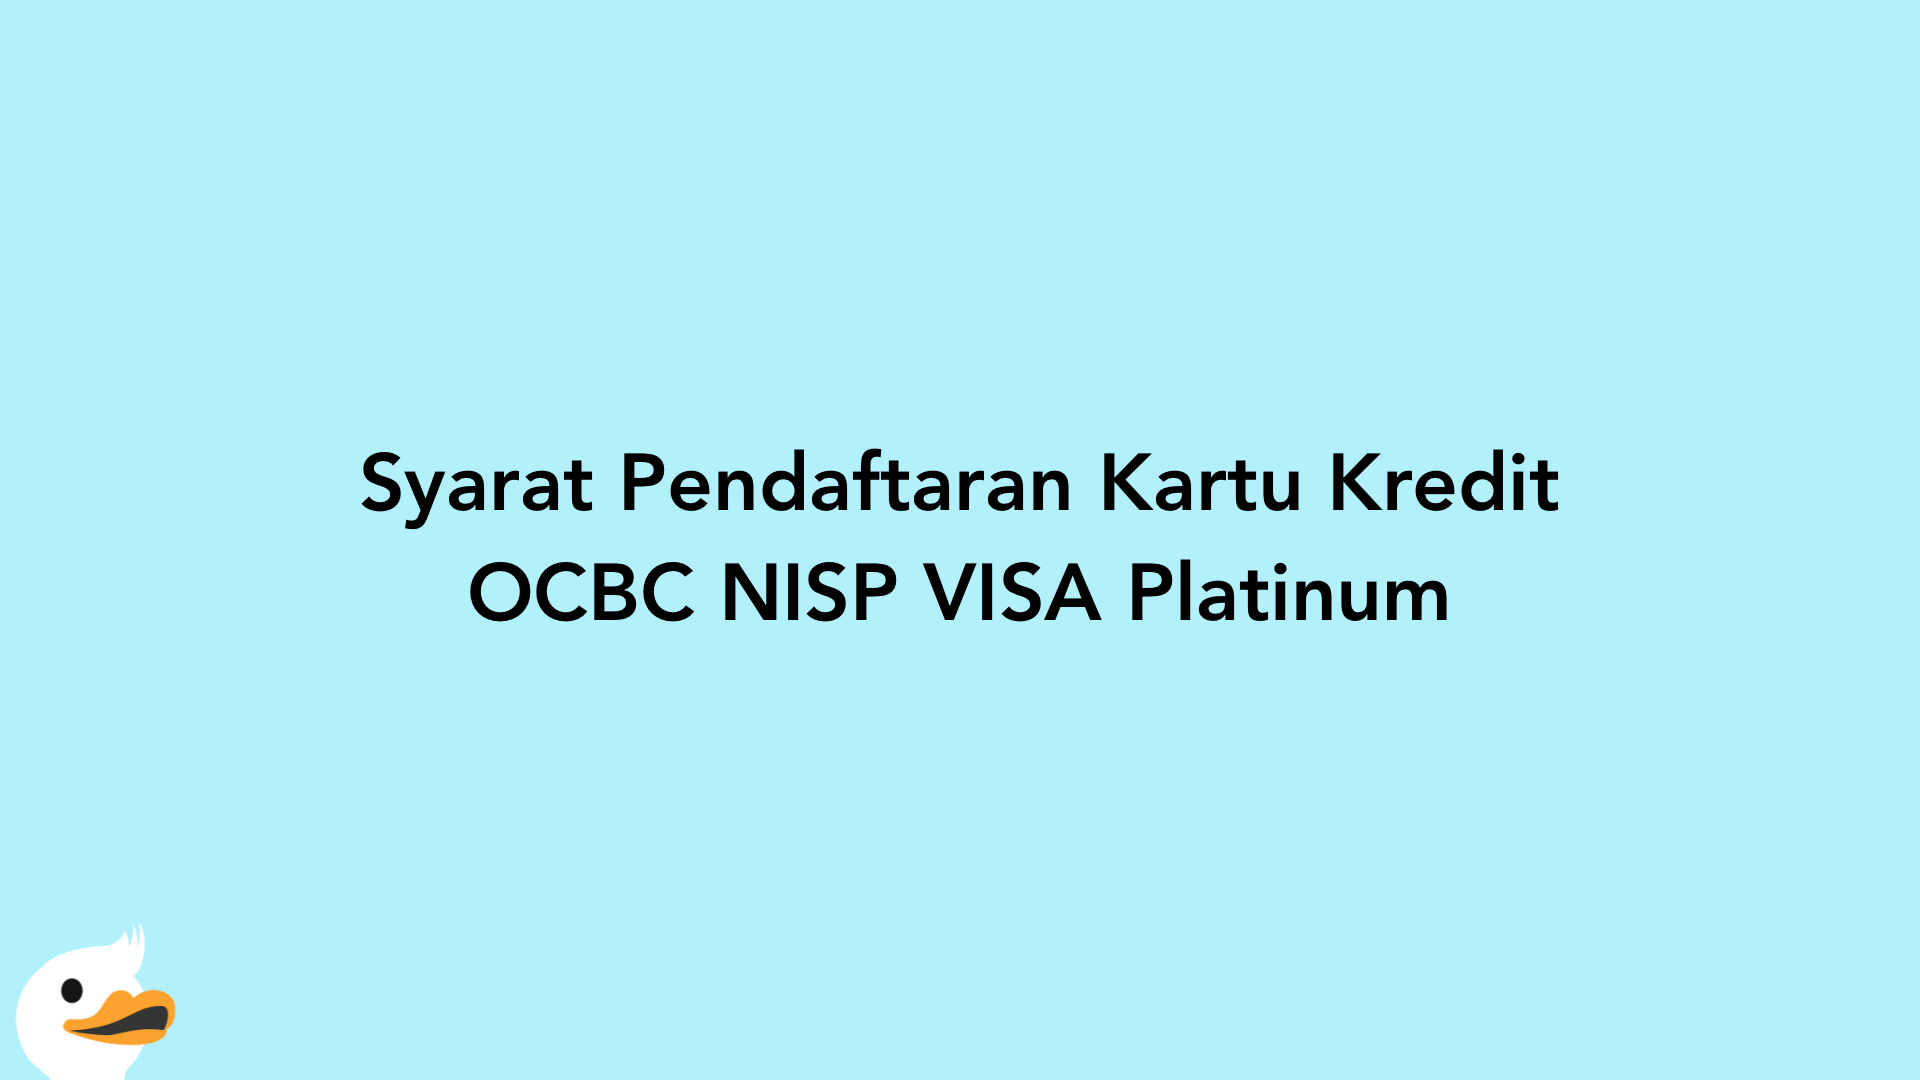 Syarat Pendaftaran Kartu Kredit OCBC NISP VISA Platinum